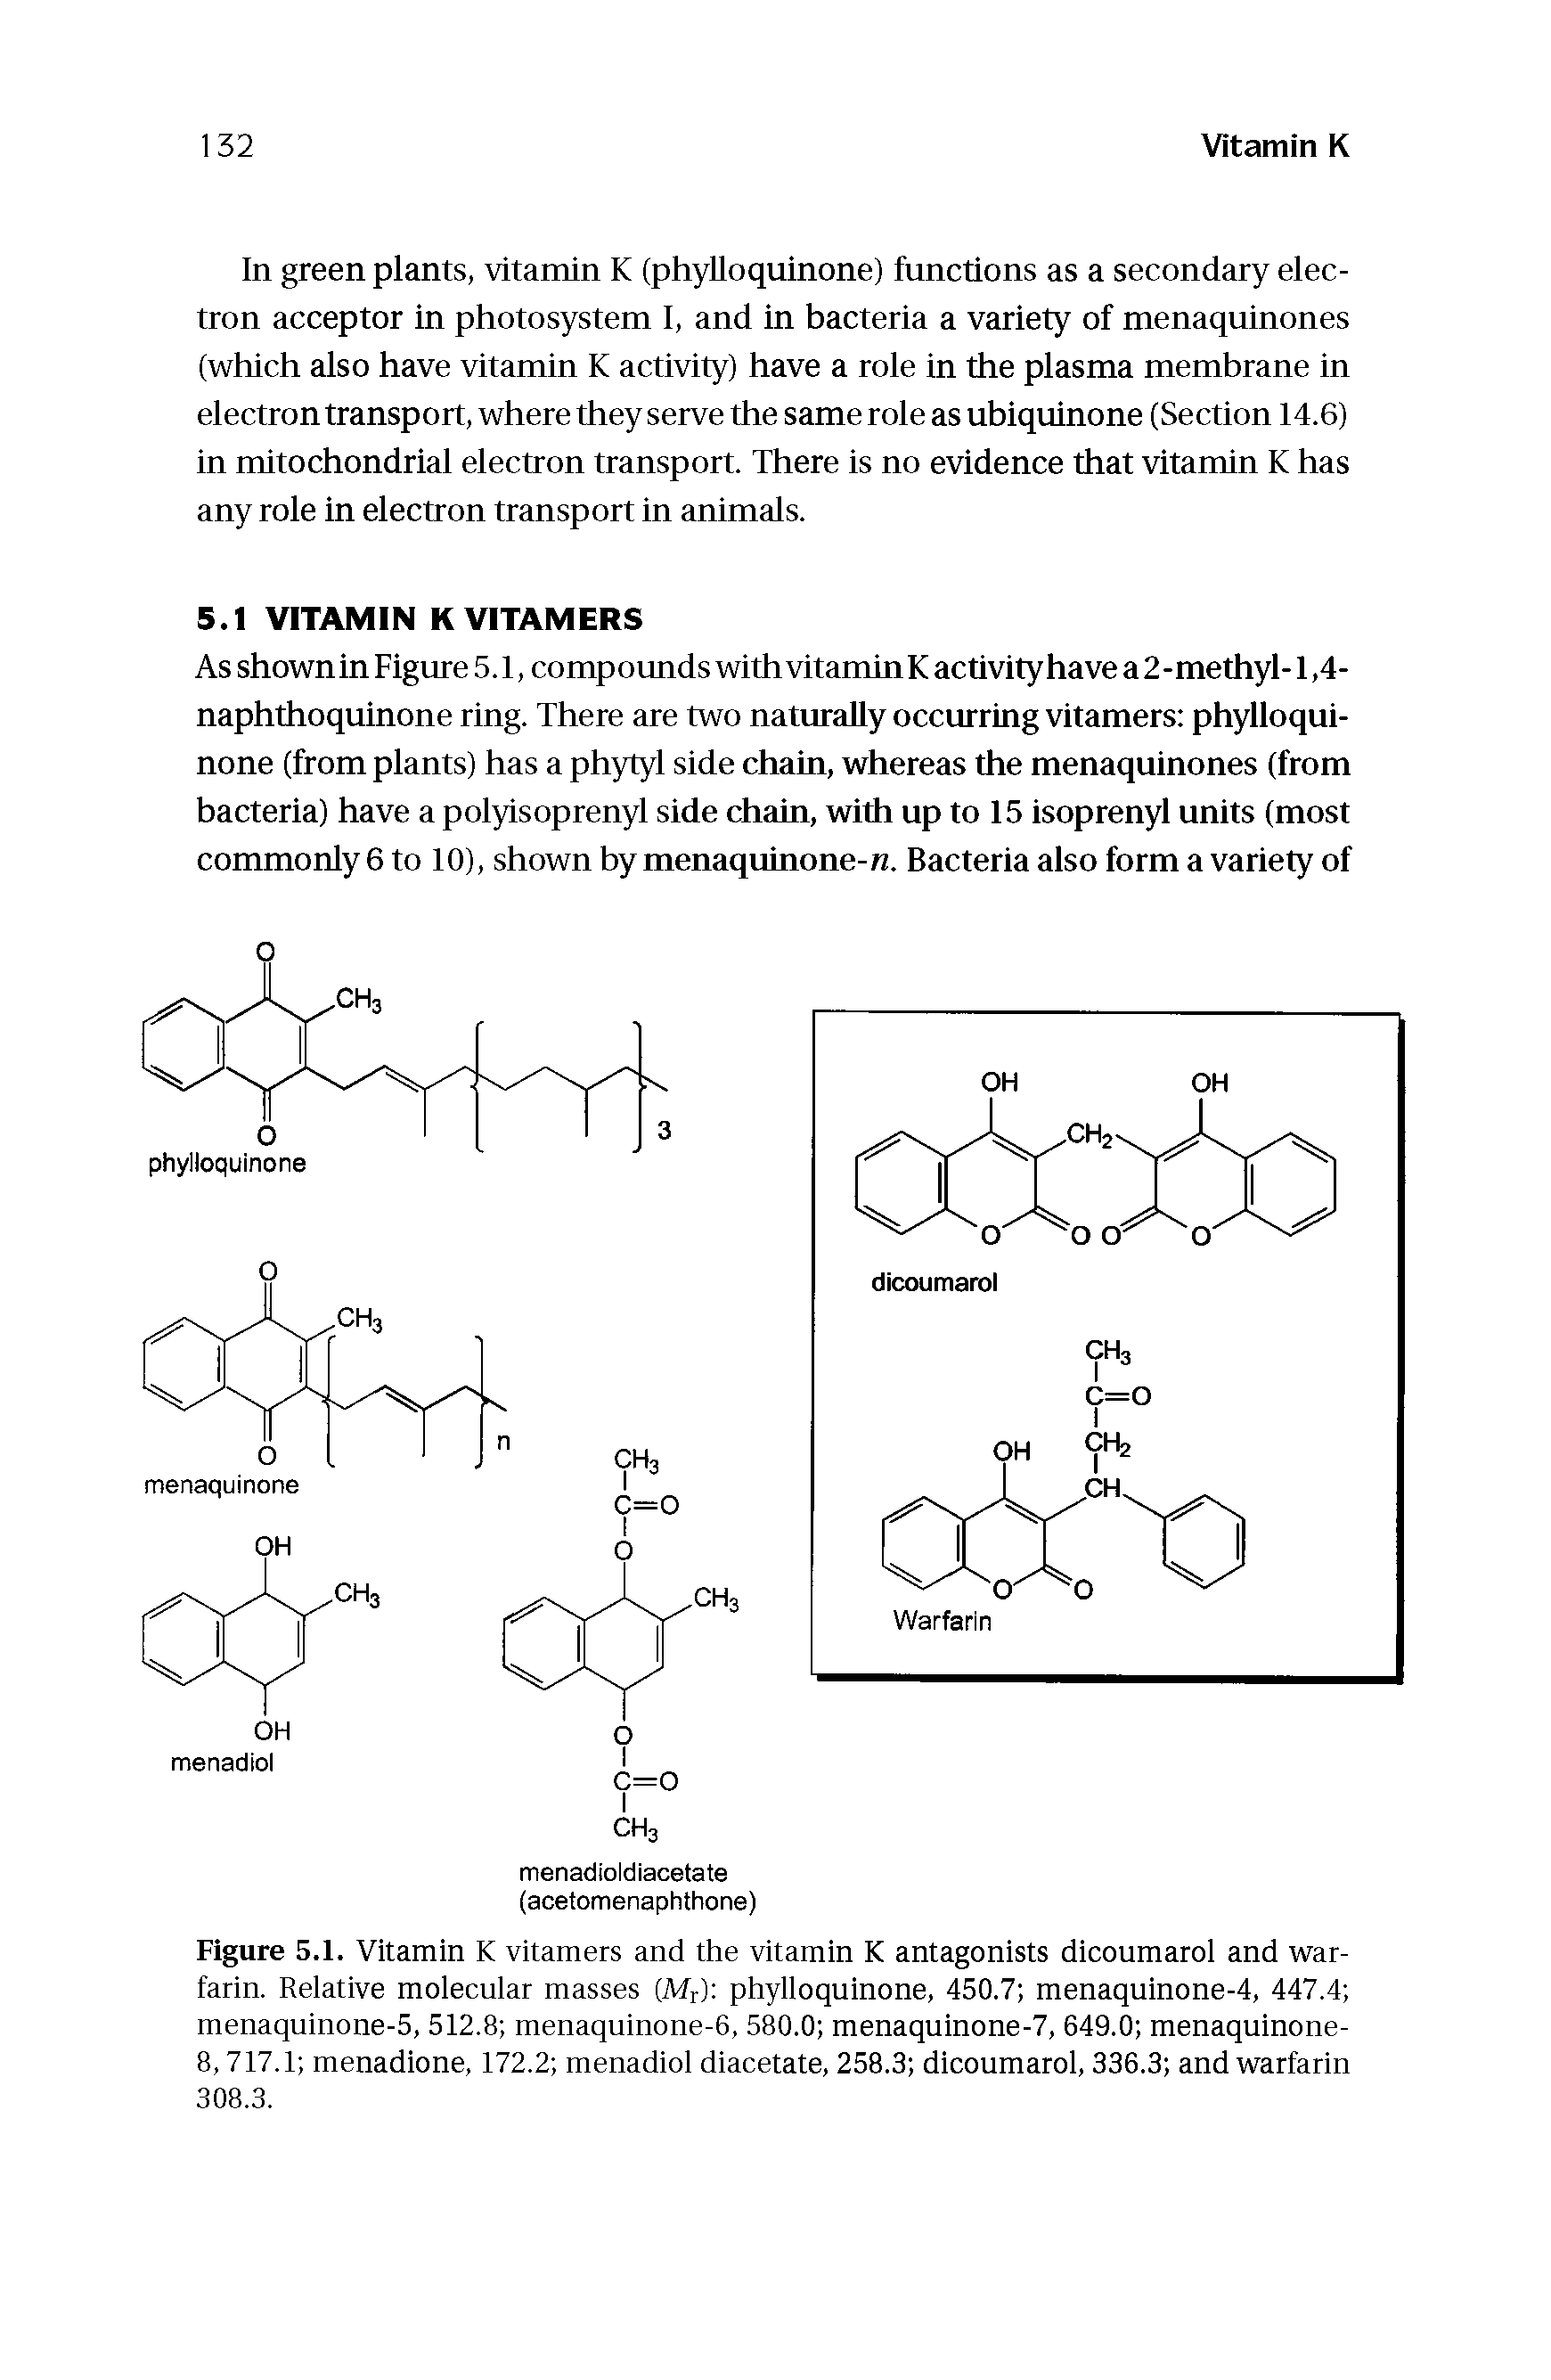 Figure 5.1. Vitamin K vitamers and the vitamin K antagonists dicoumarol and war-farin. Relative molecular masses (Mr) phyUoquinone, 450.7 menaquinone-4, 447.4 menaquinone-5, 512.8 menaquinone-6, 580.0 menaquinone-7, 649.0 menaquinone-8,717.1 menadione, 172.2 menadiol diacetate, 258.3 dicoumarol, 336.3 and warfarin 308.3.